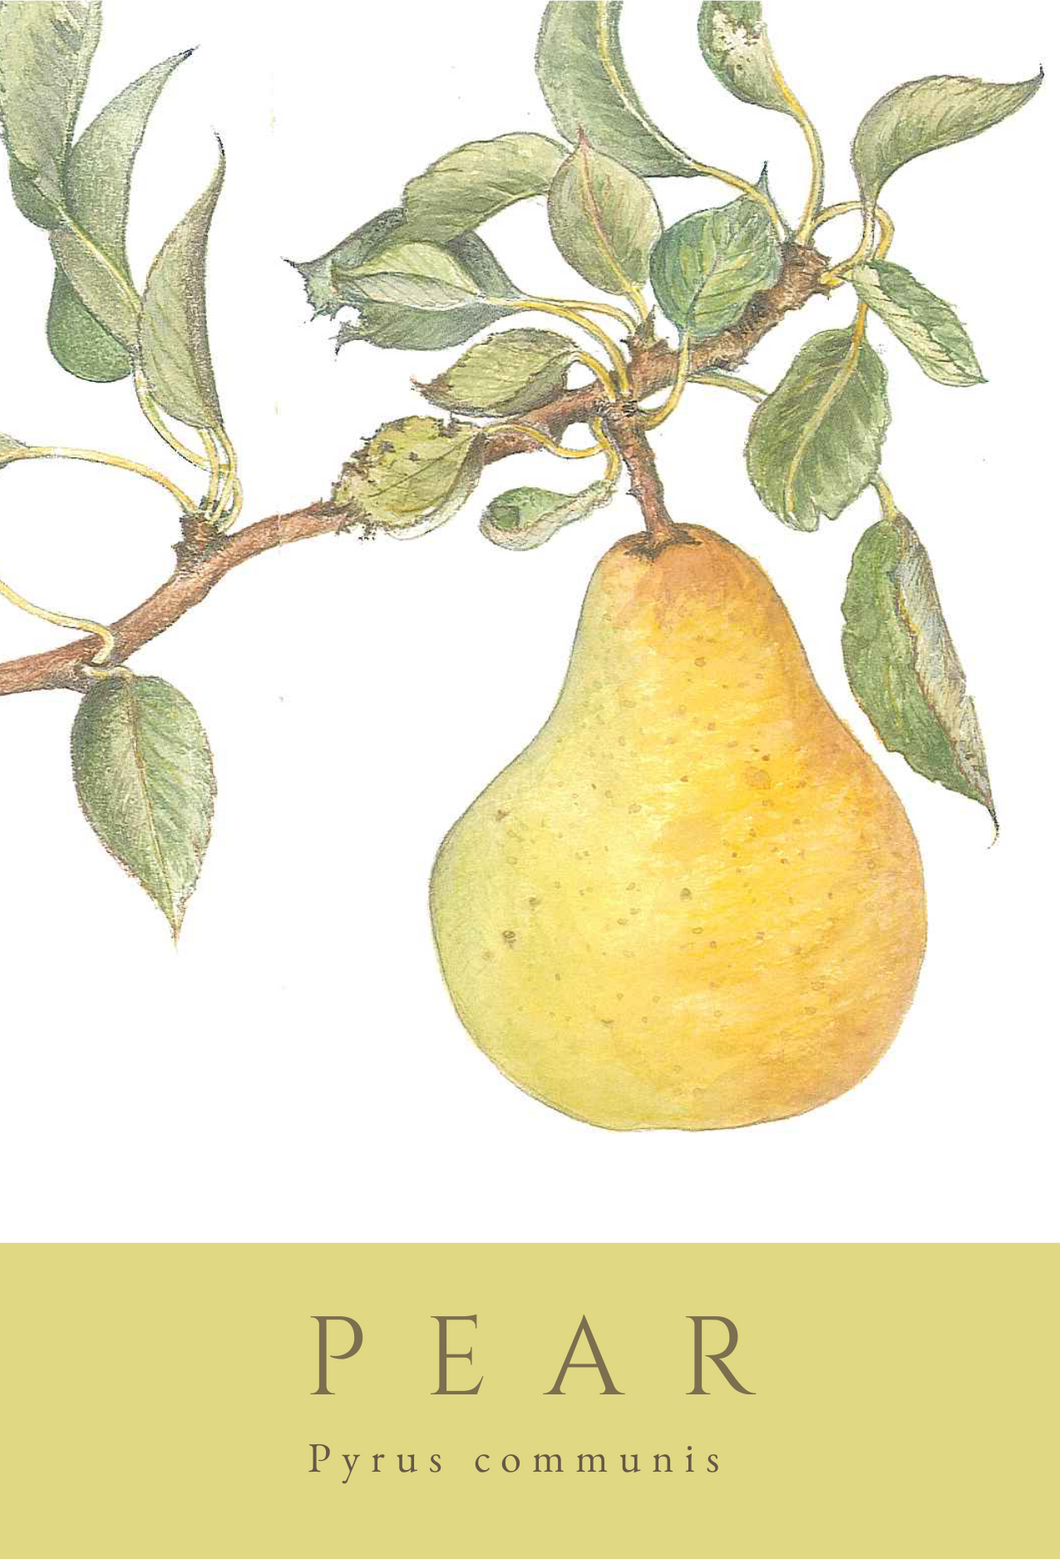 Pear greeting card